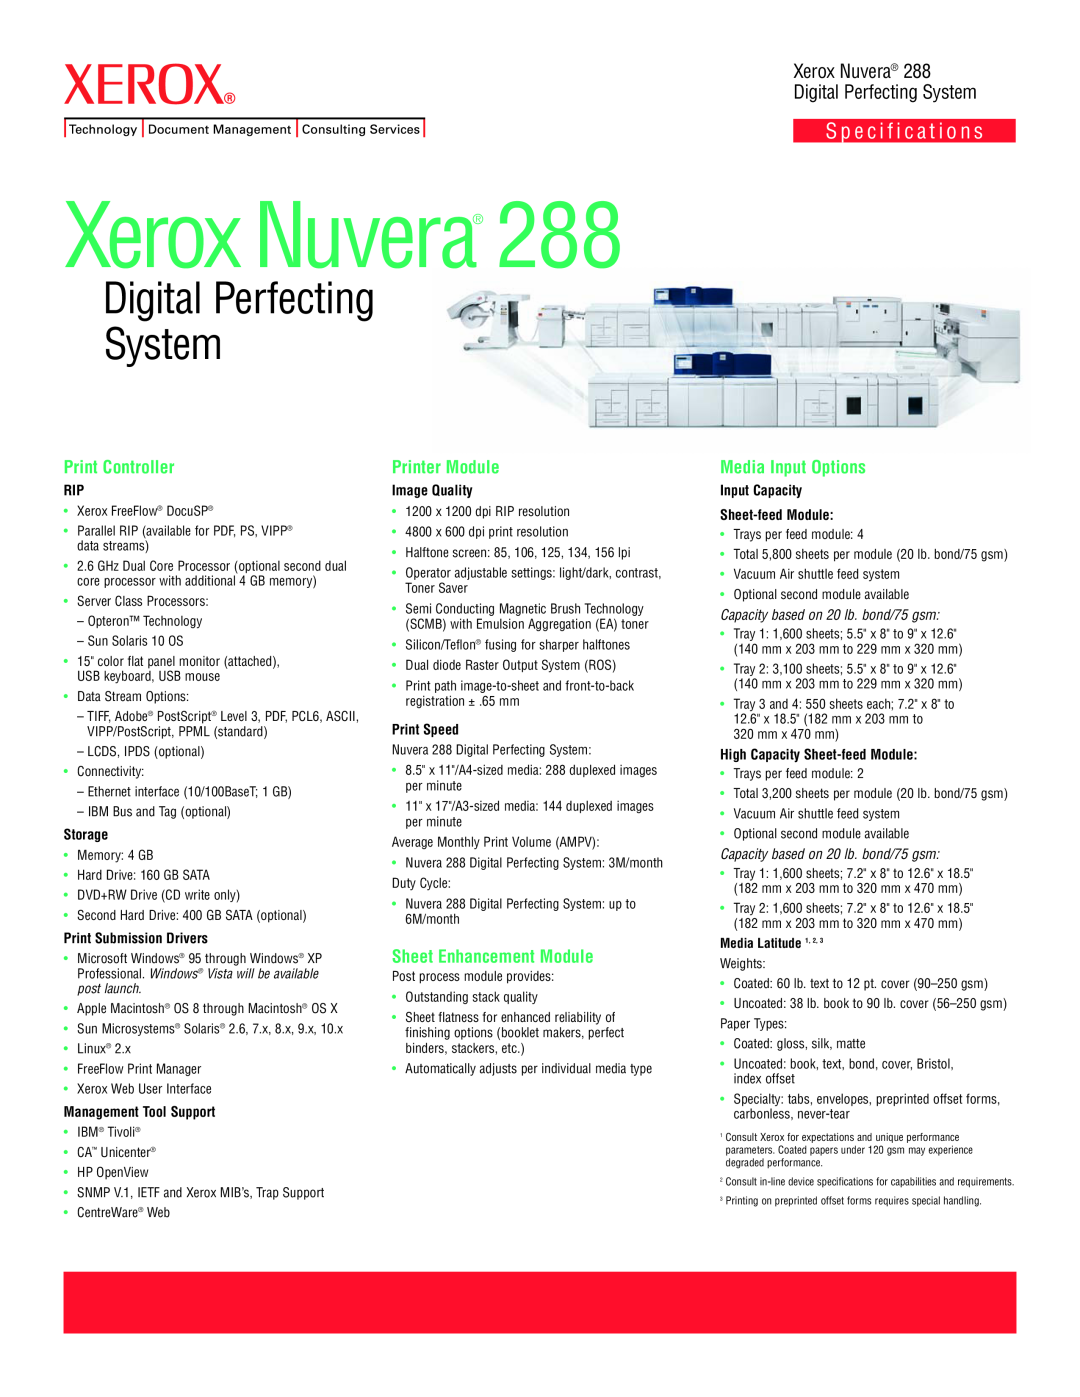 Xerox 288 specifications Print Controller, Printer Module, Media Input Options, Sheet Enhancement Module, Storage 